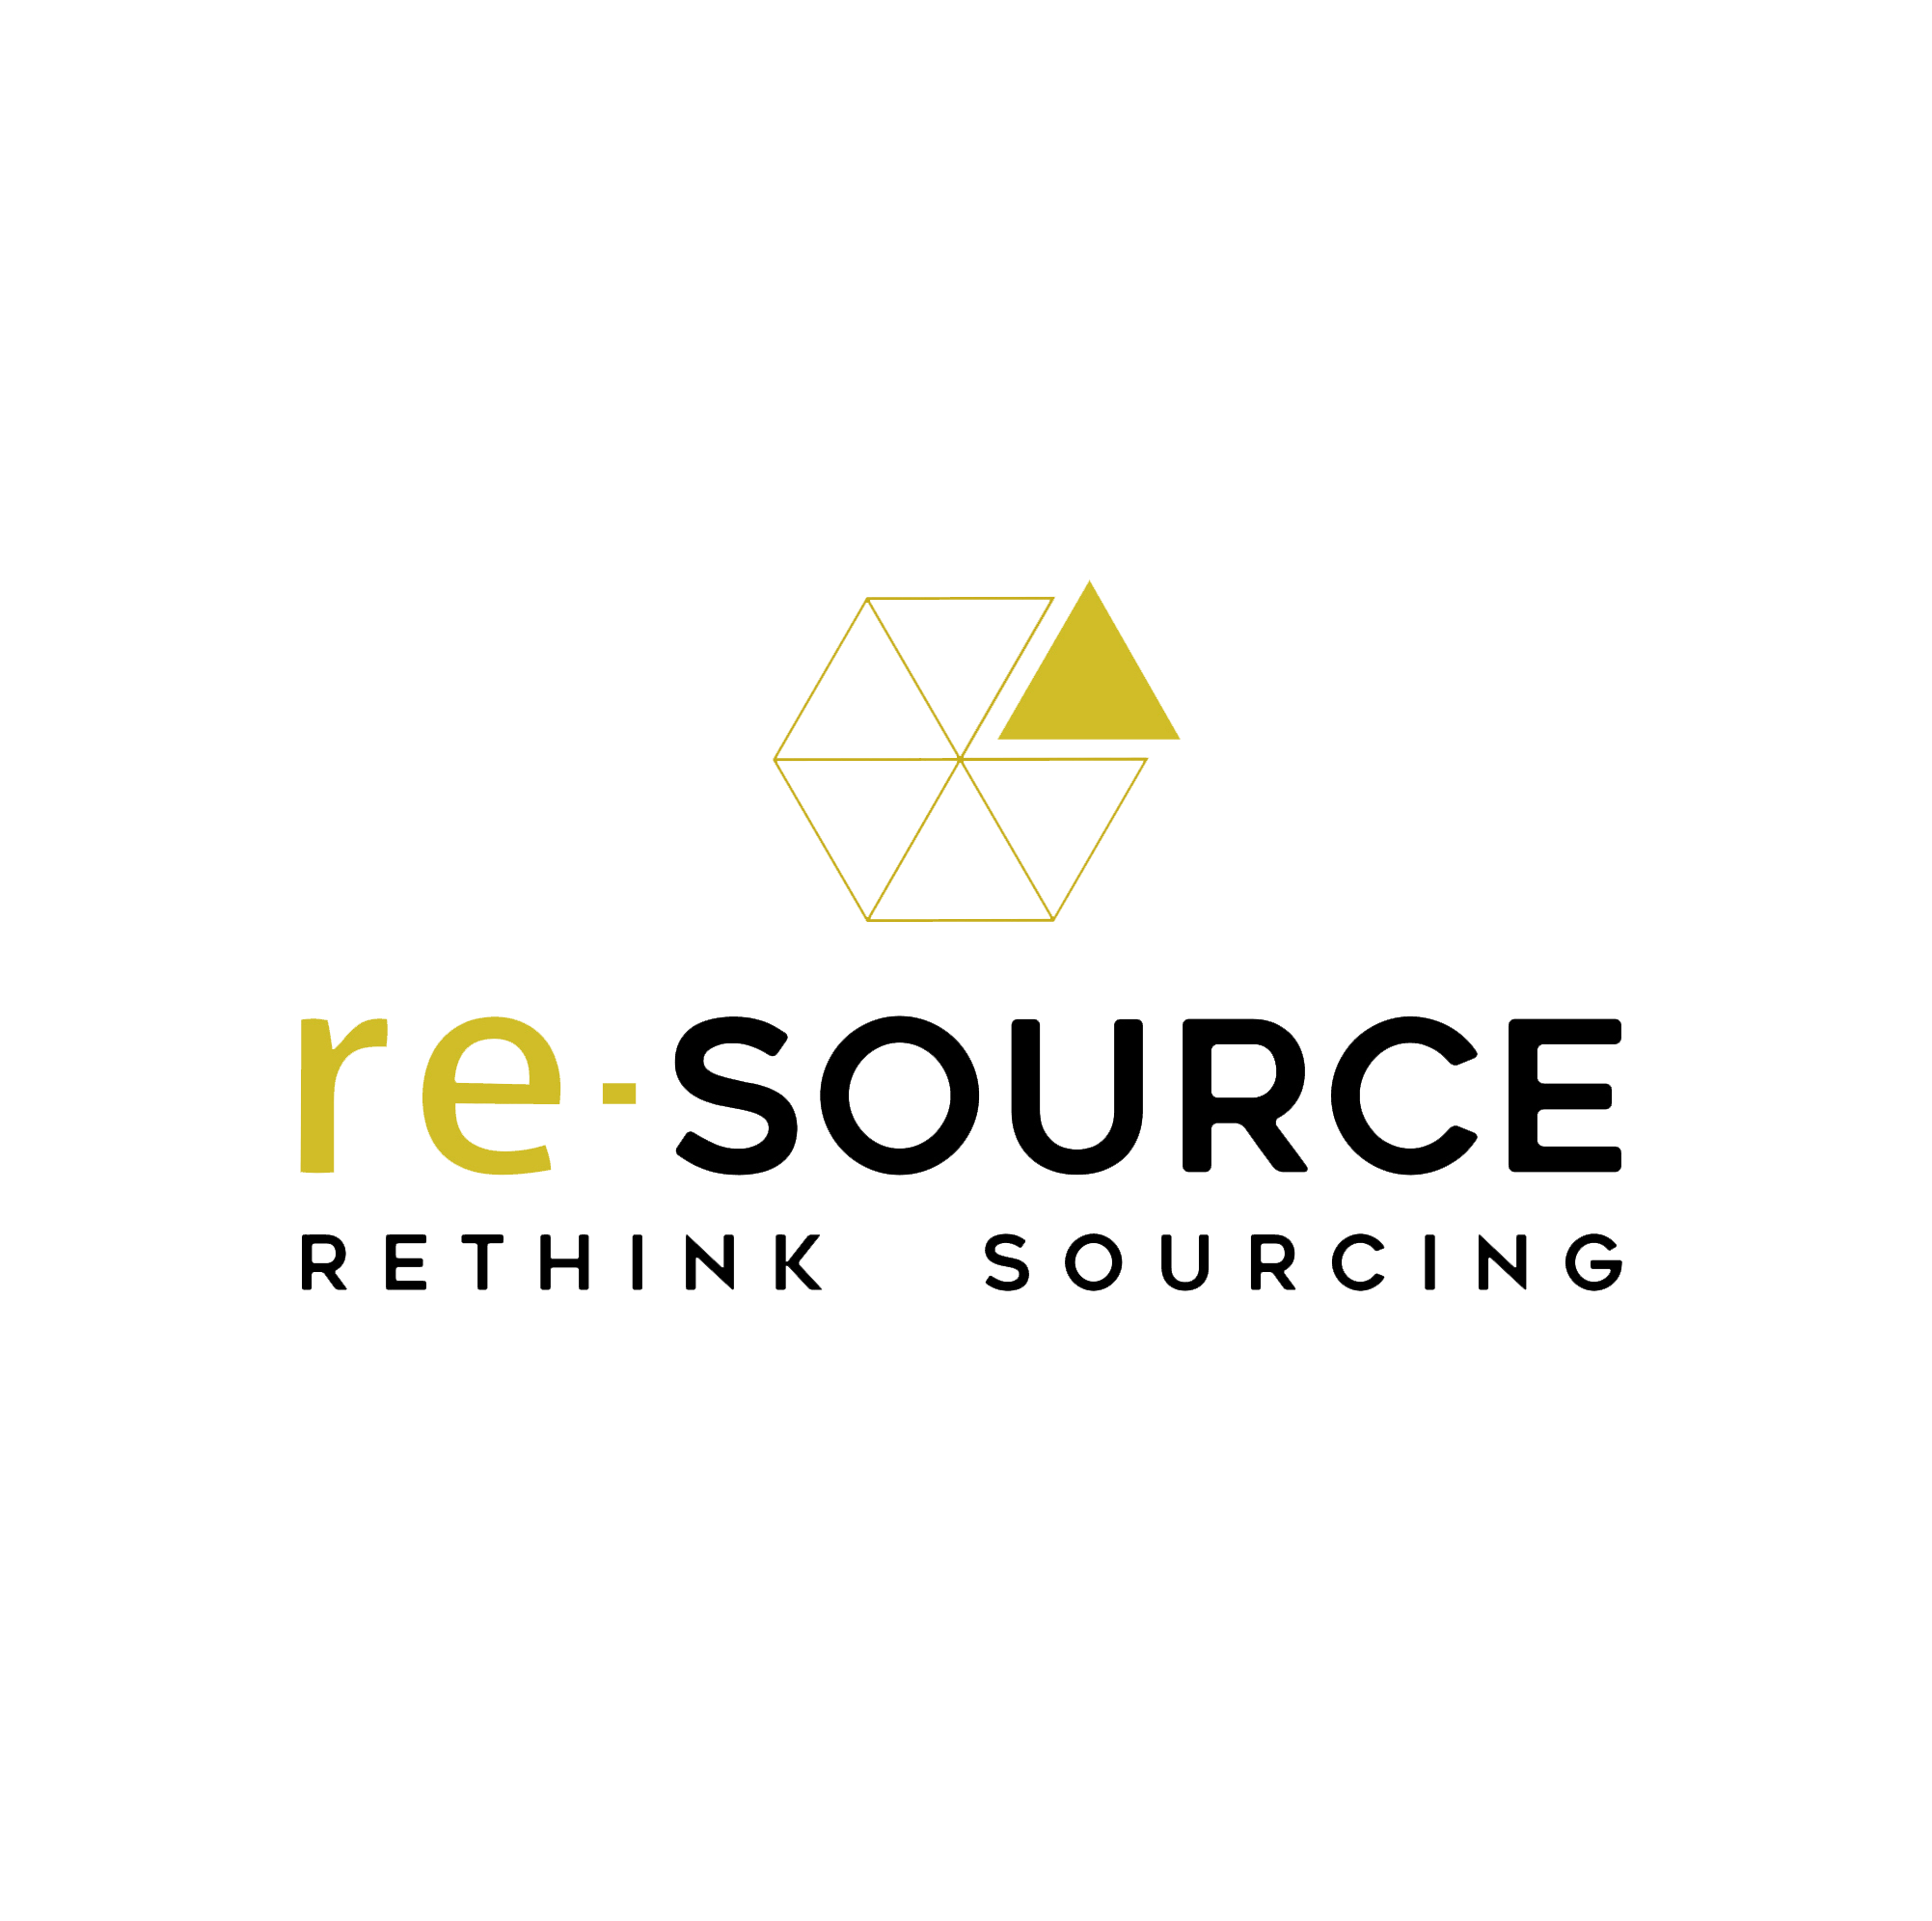 Re:sources компания. Логотип смола. Blackmagic Design Pte Ltd. Source company